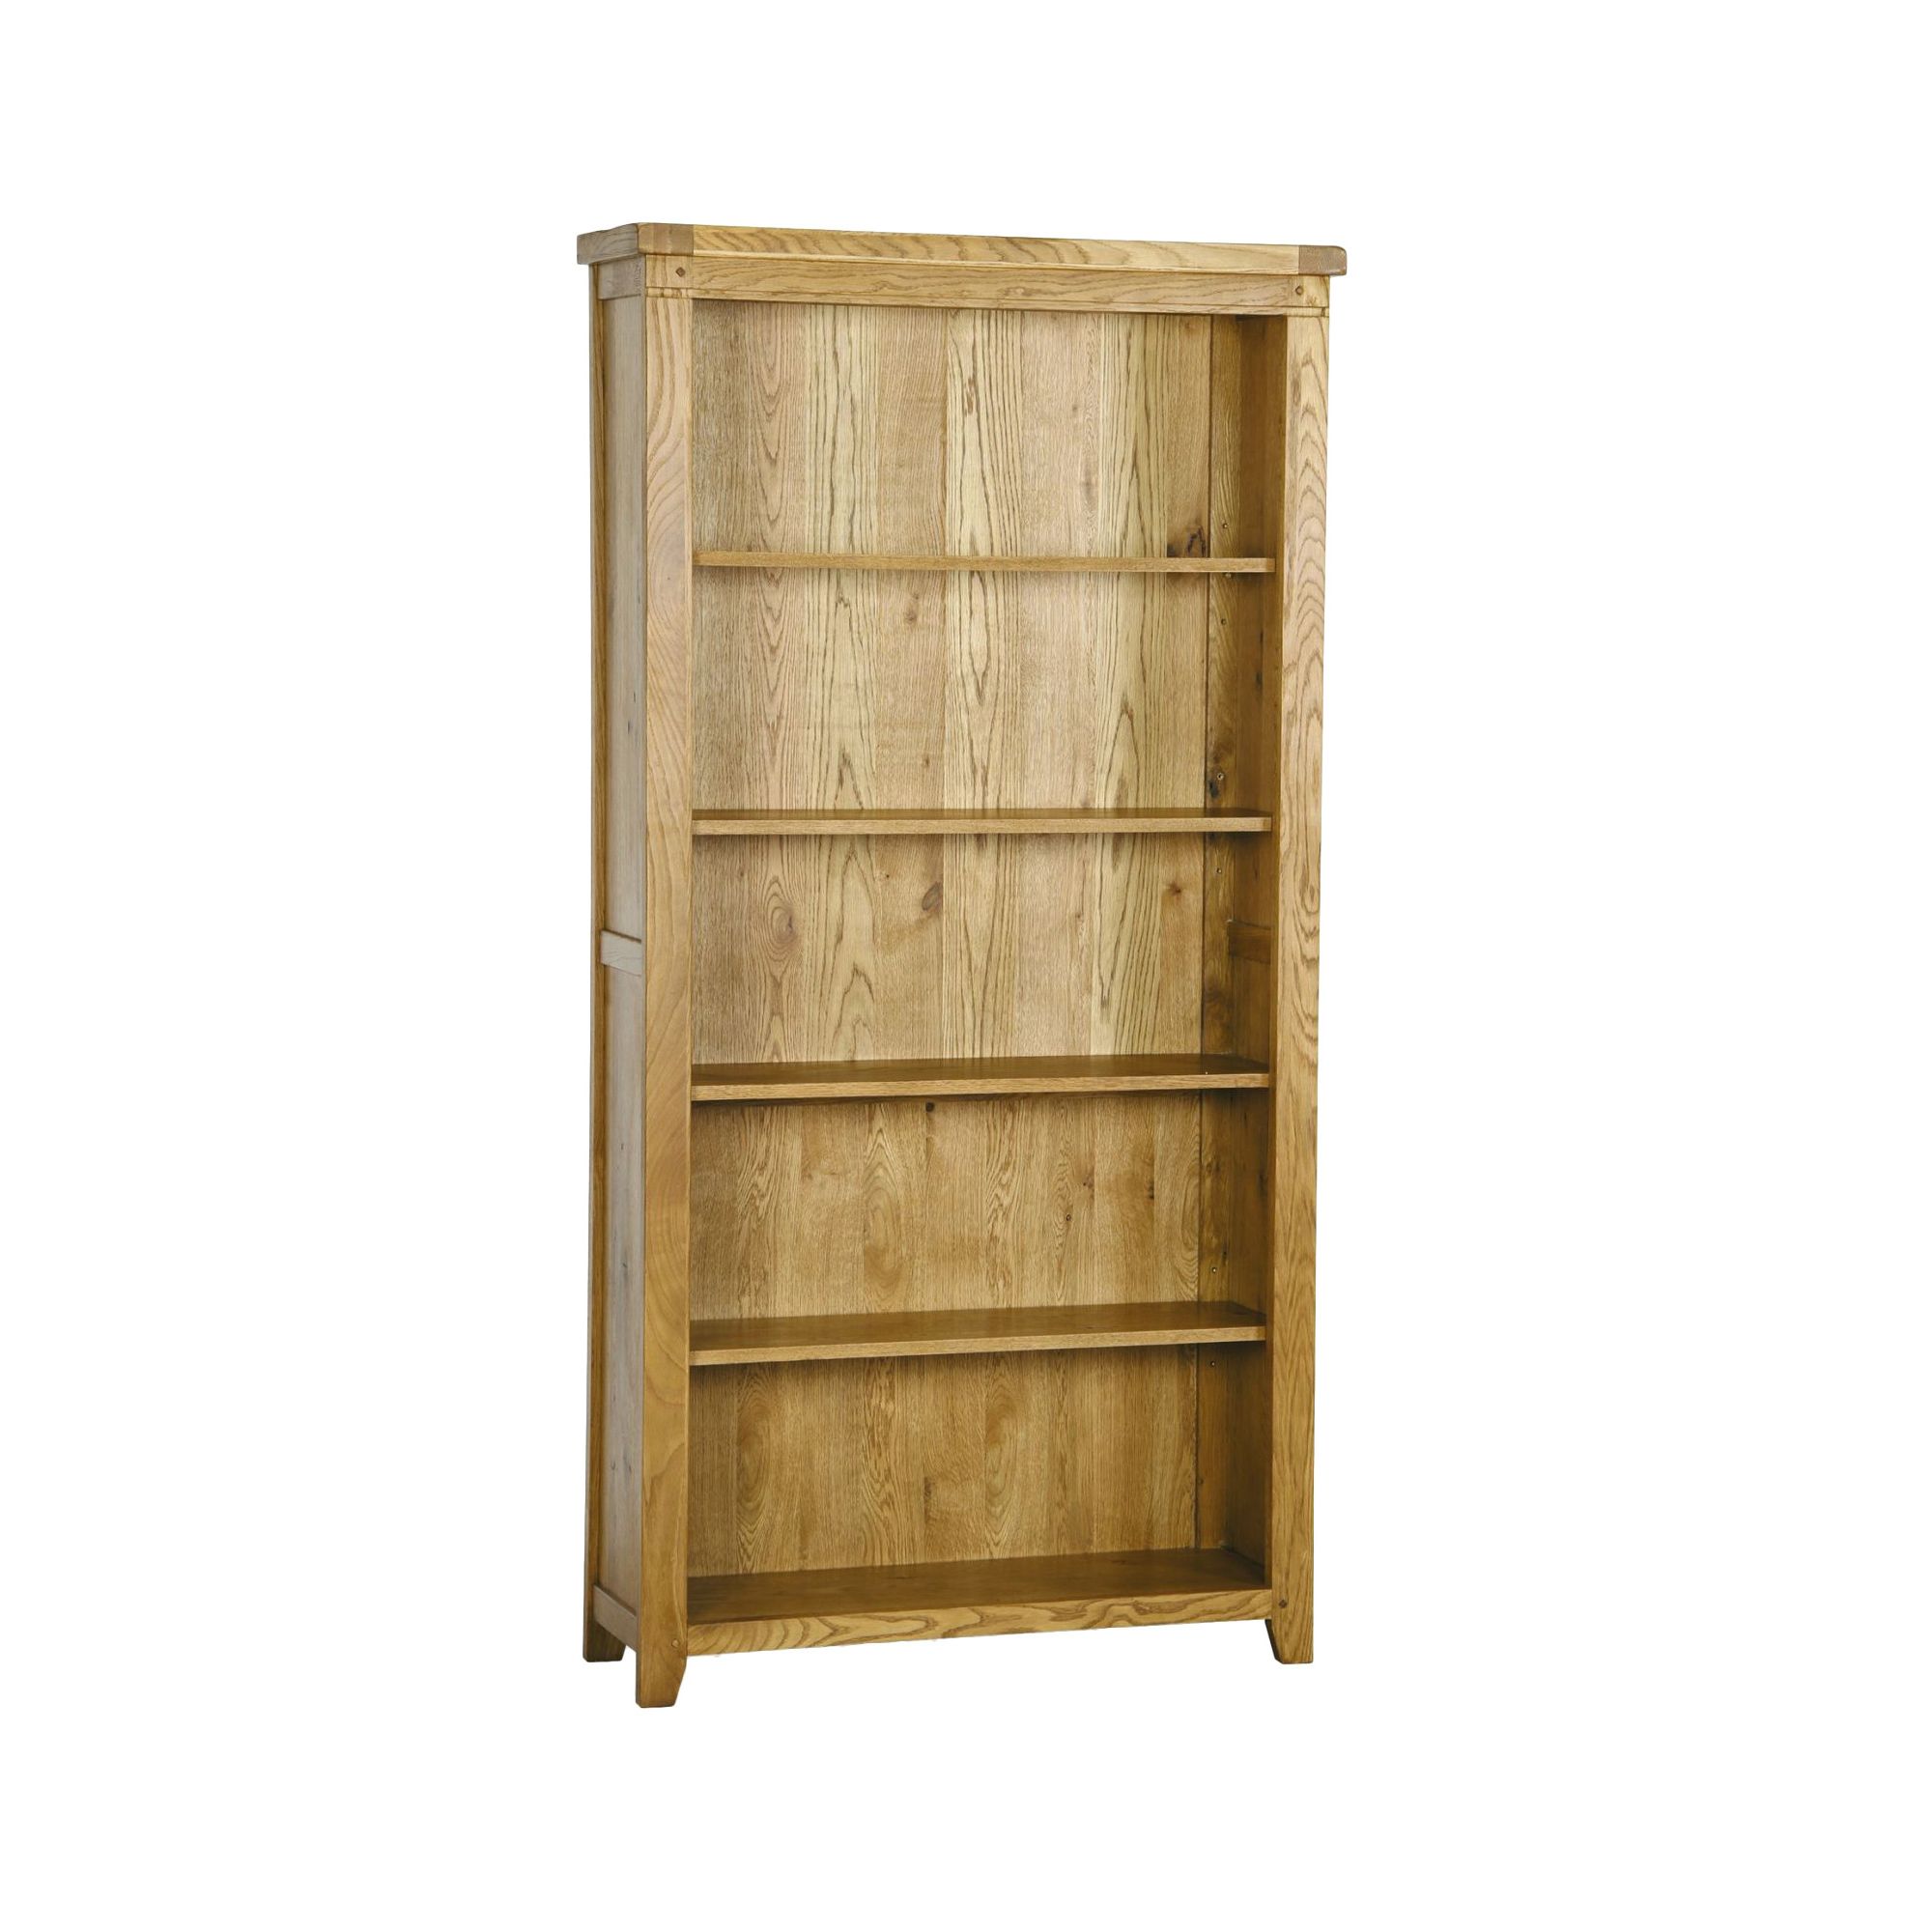 Kelburn Furniture Veneto Rustic Oak Tall Bookcase at Tesco Direct